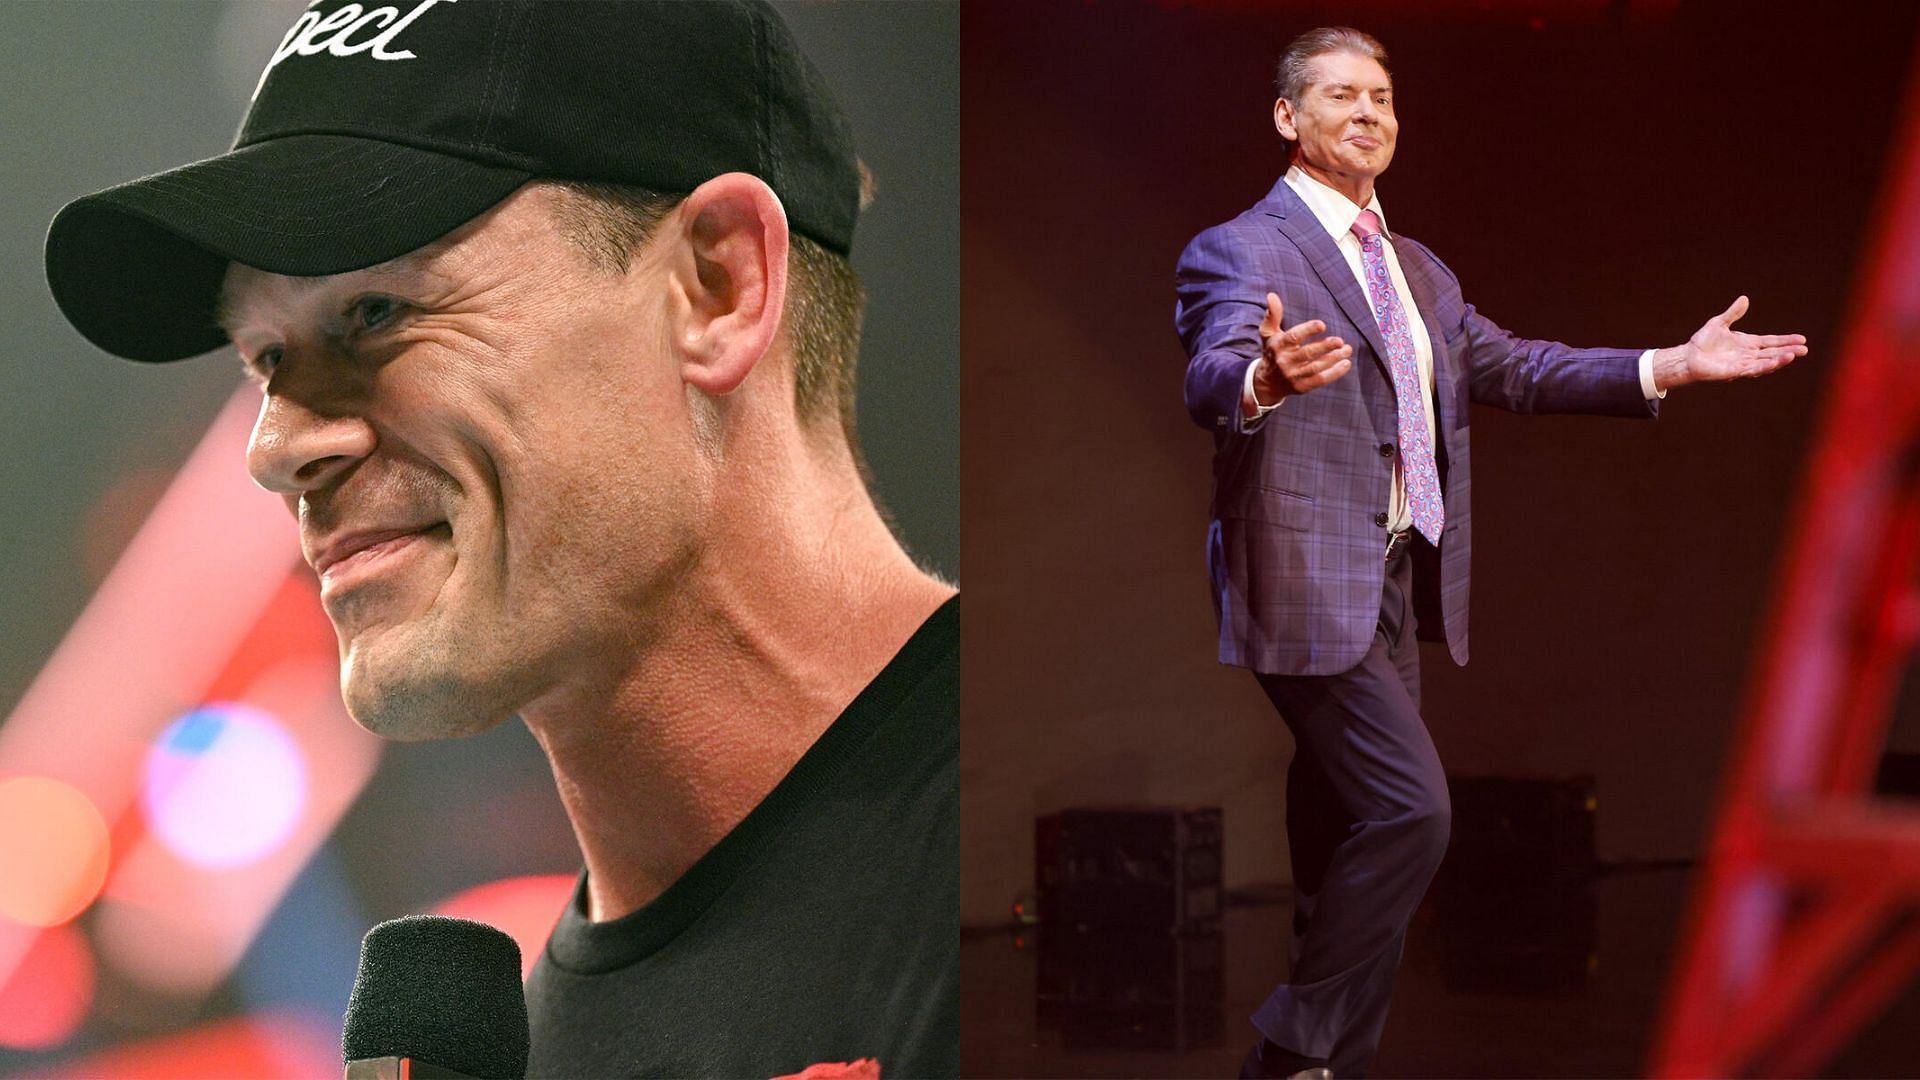 John Cena (left) and Vince McMahon (right) [Photo Courtesy: WWE.com]